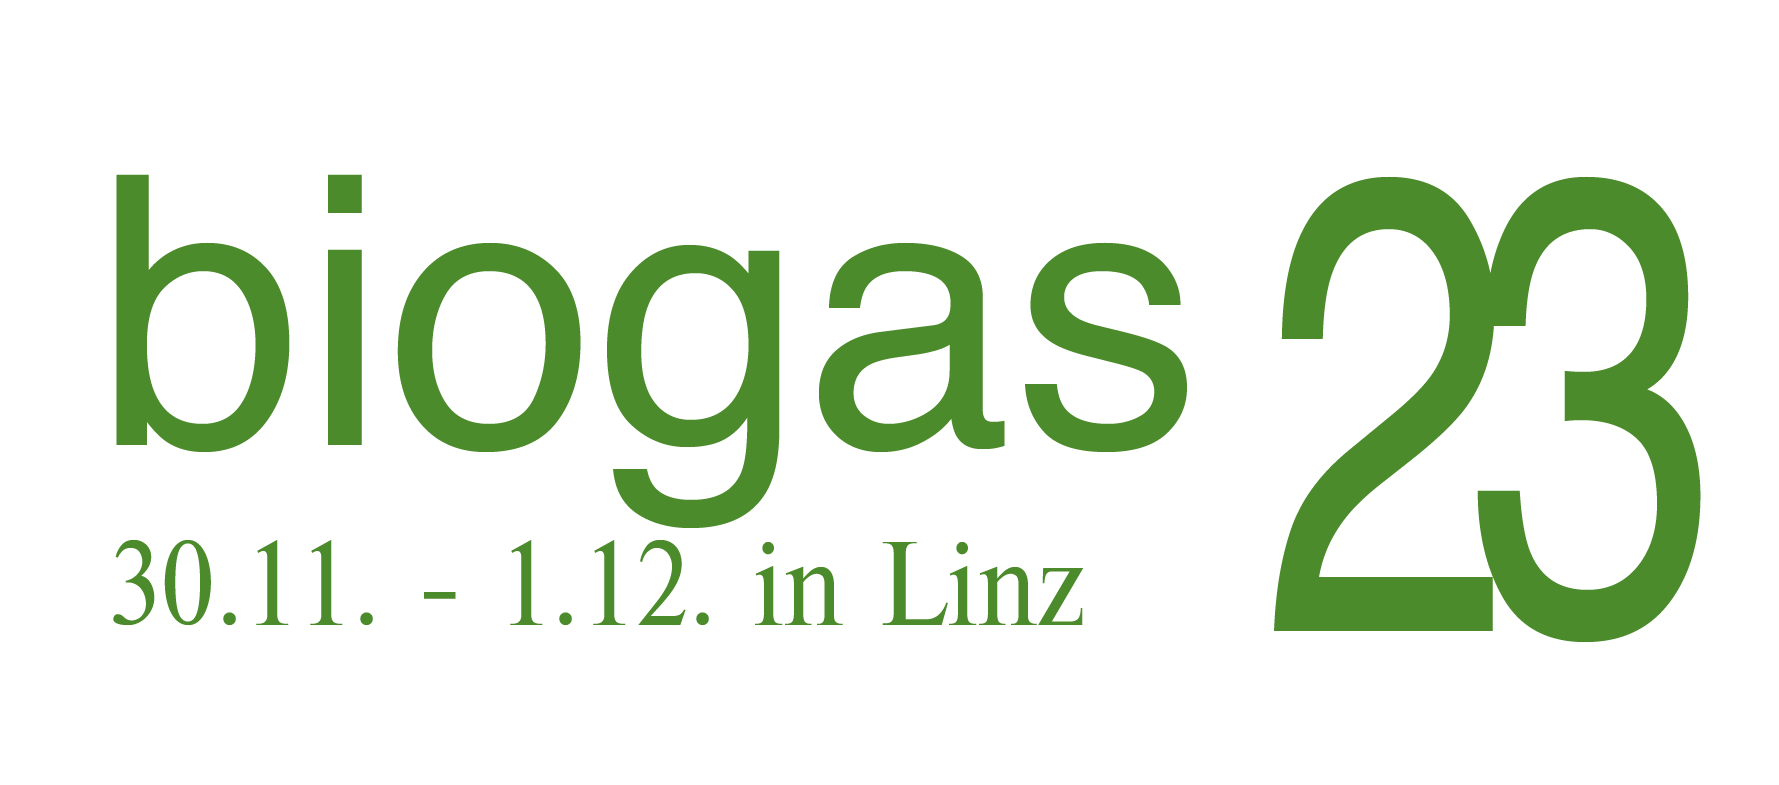 biogas23 in Linz